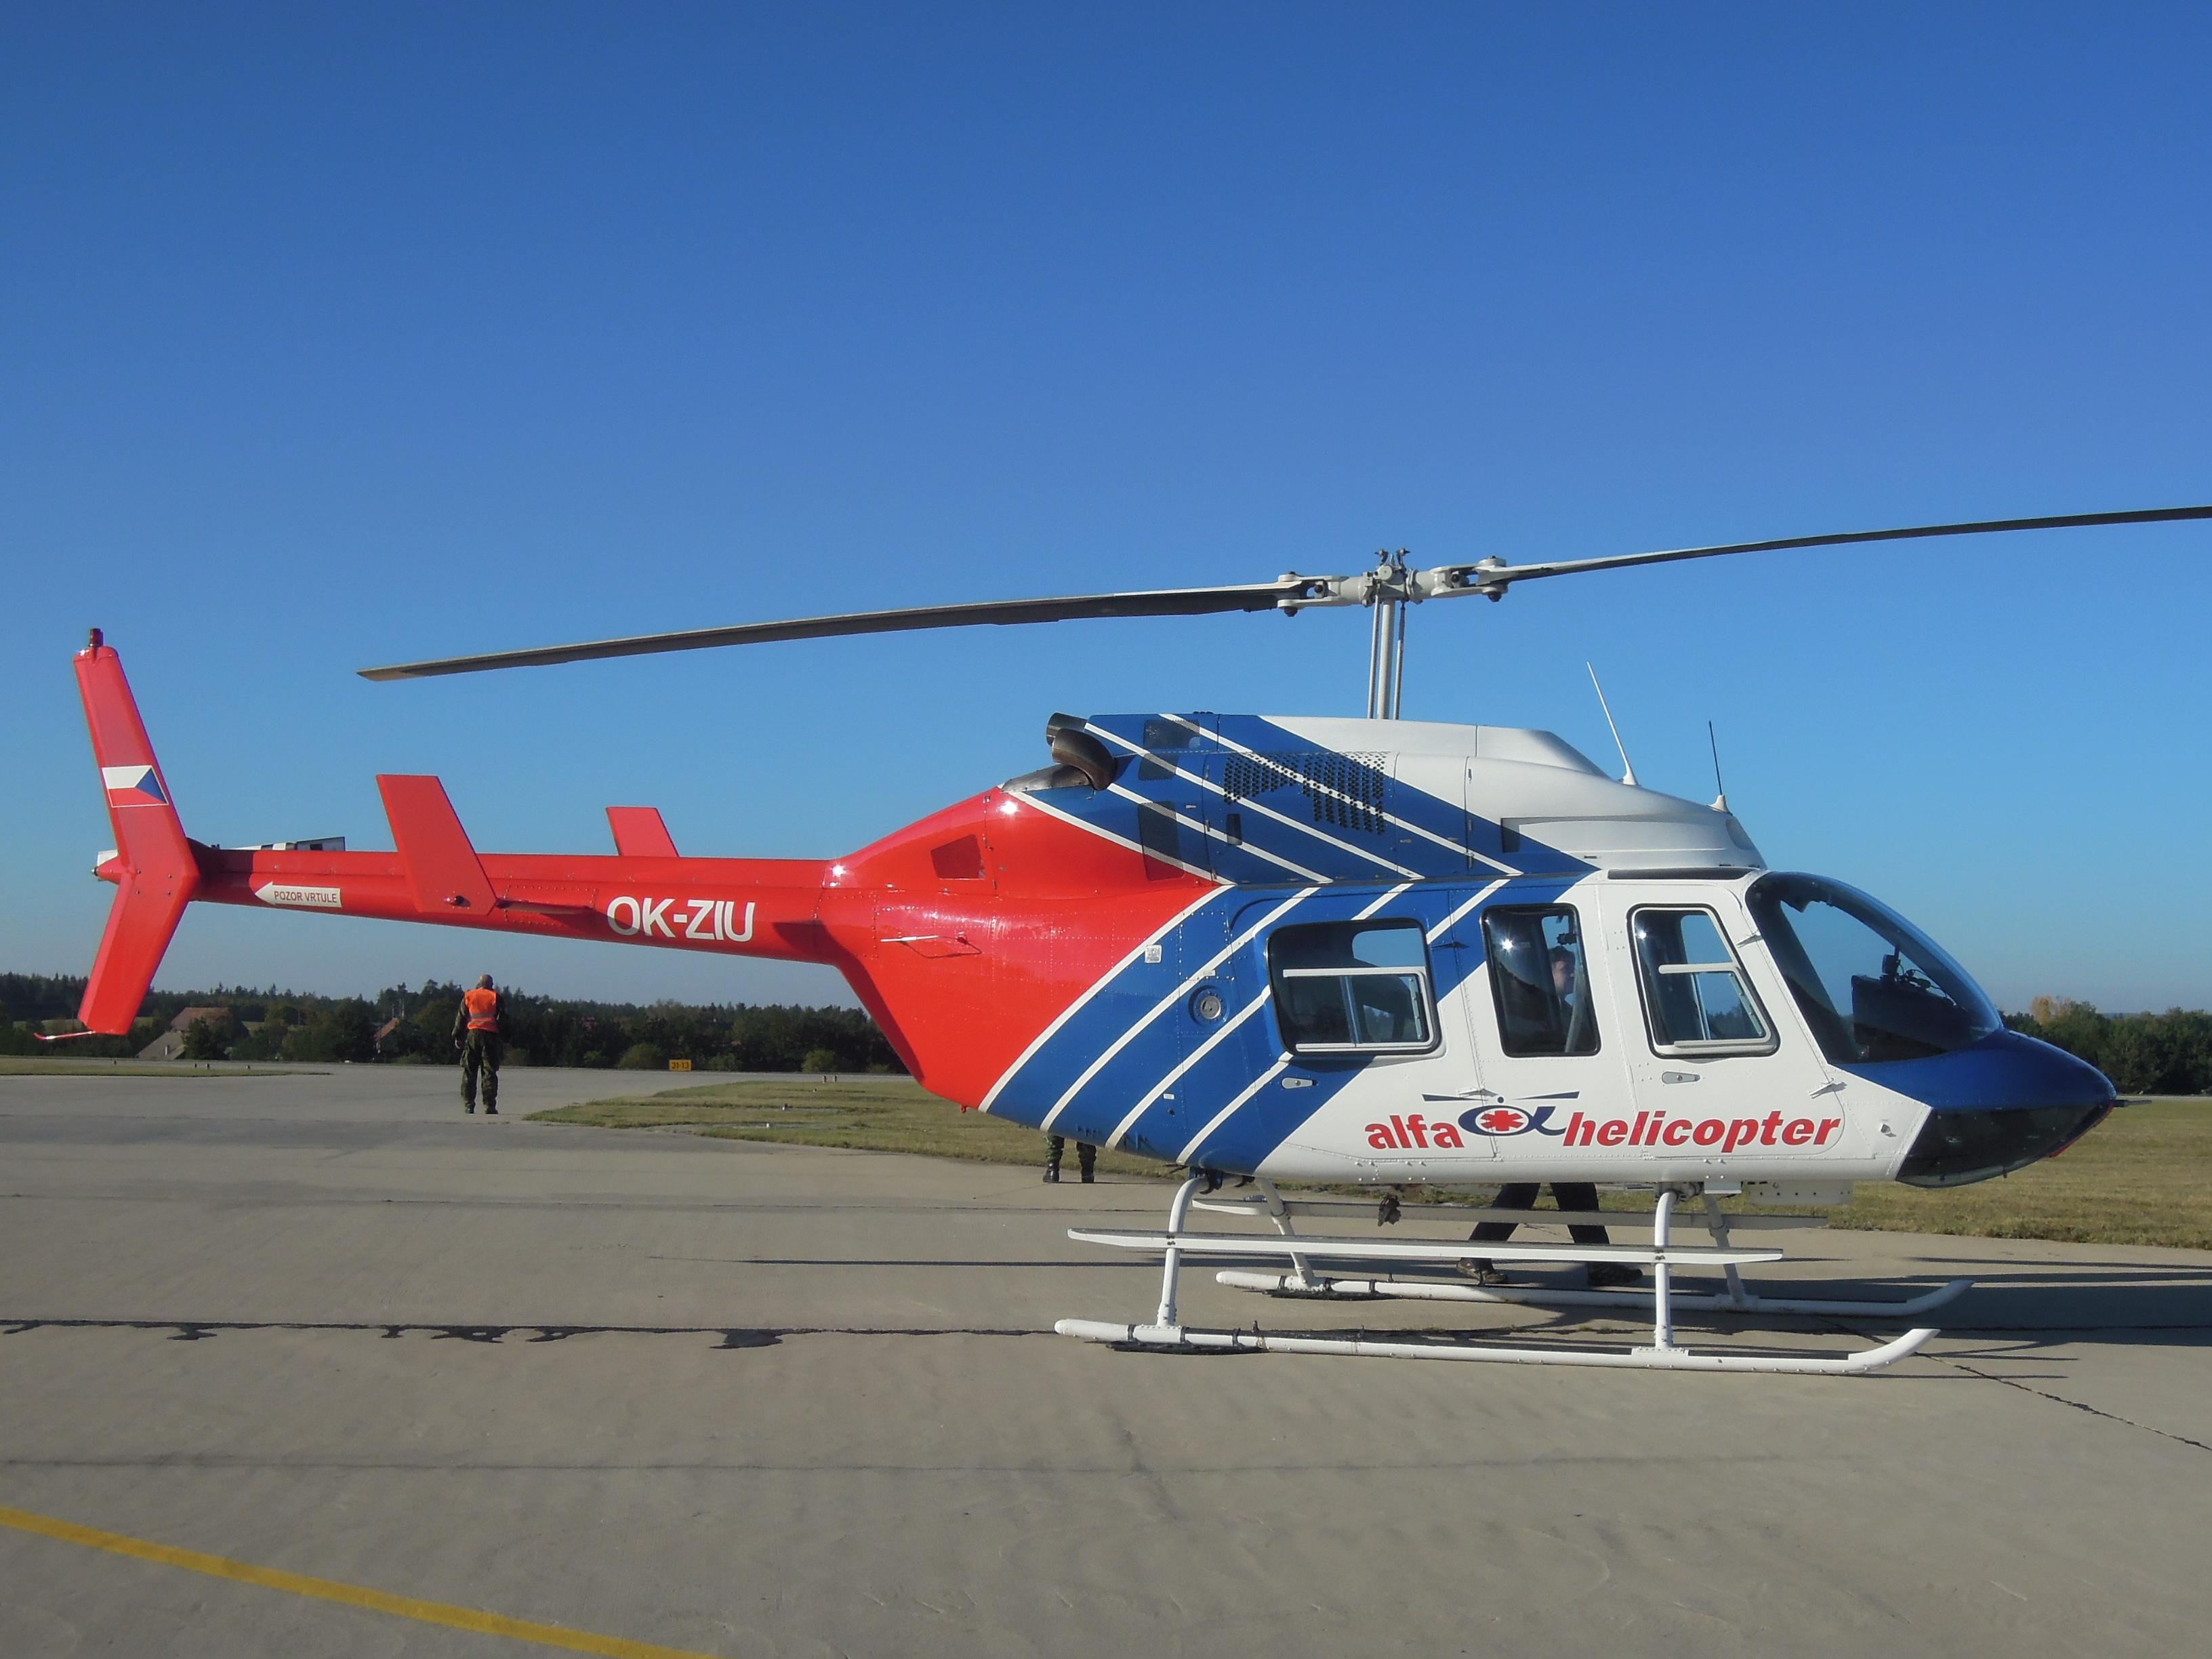 Bell 206L-4T, OK-ZIU, Alfa-Helicopter (02)